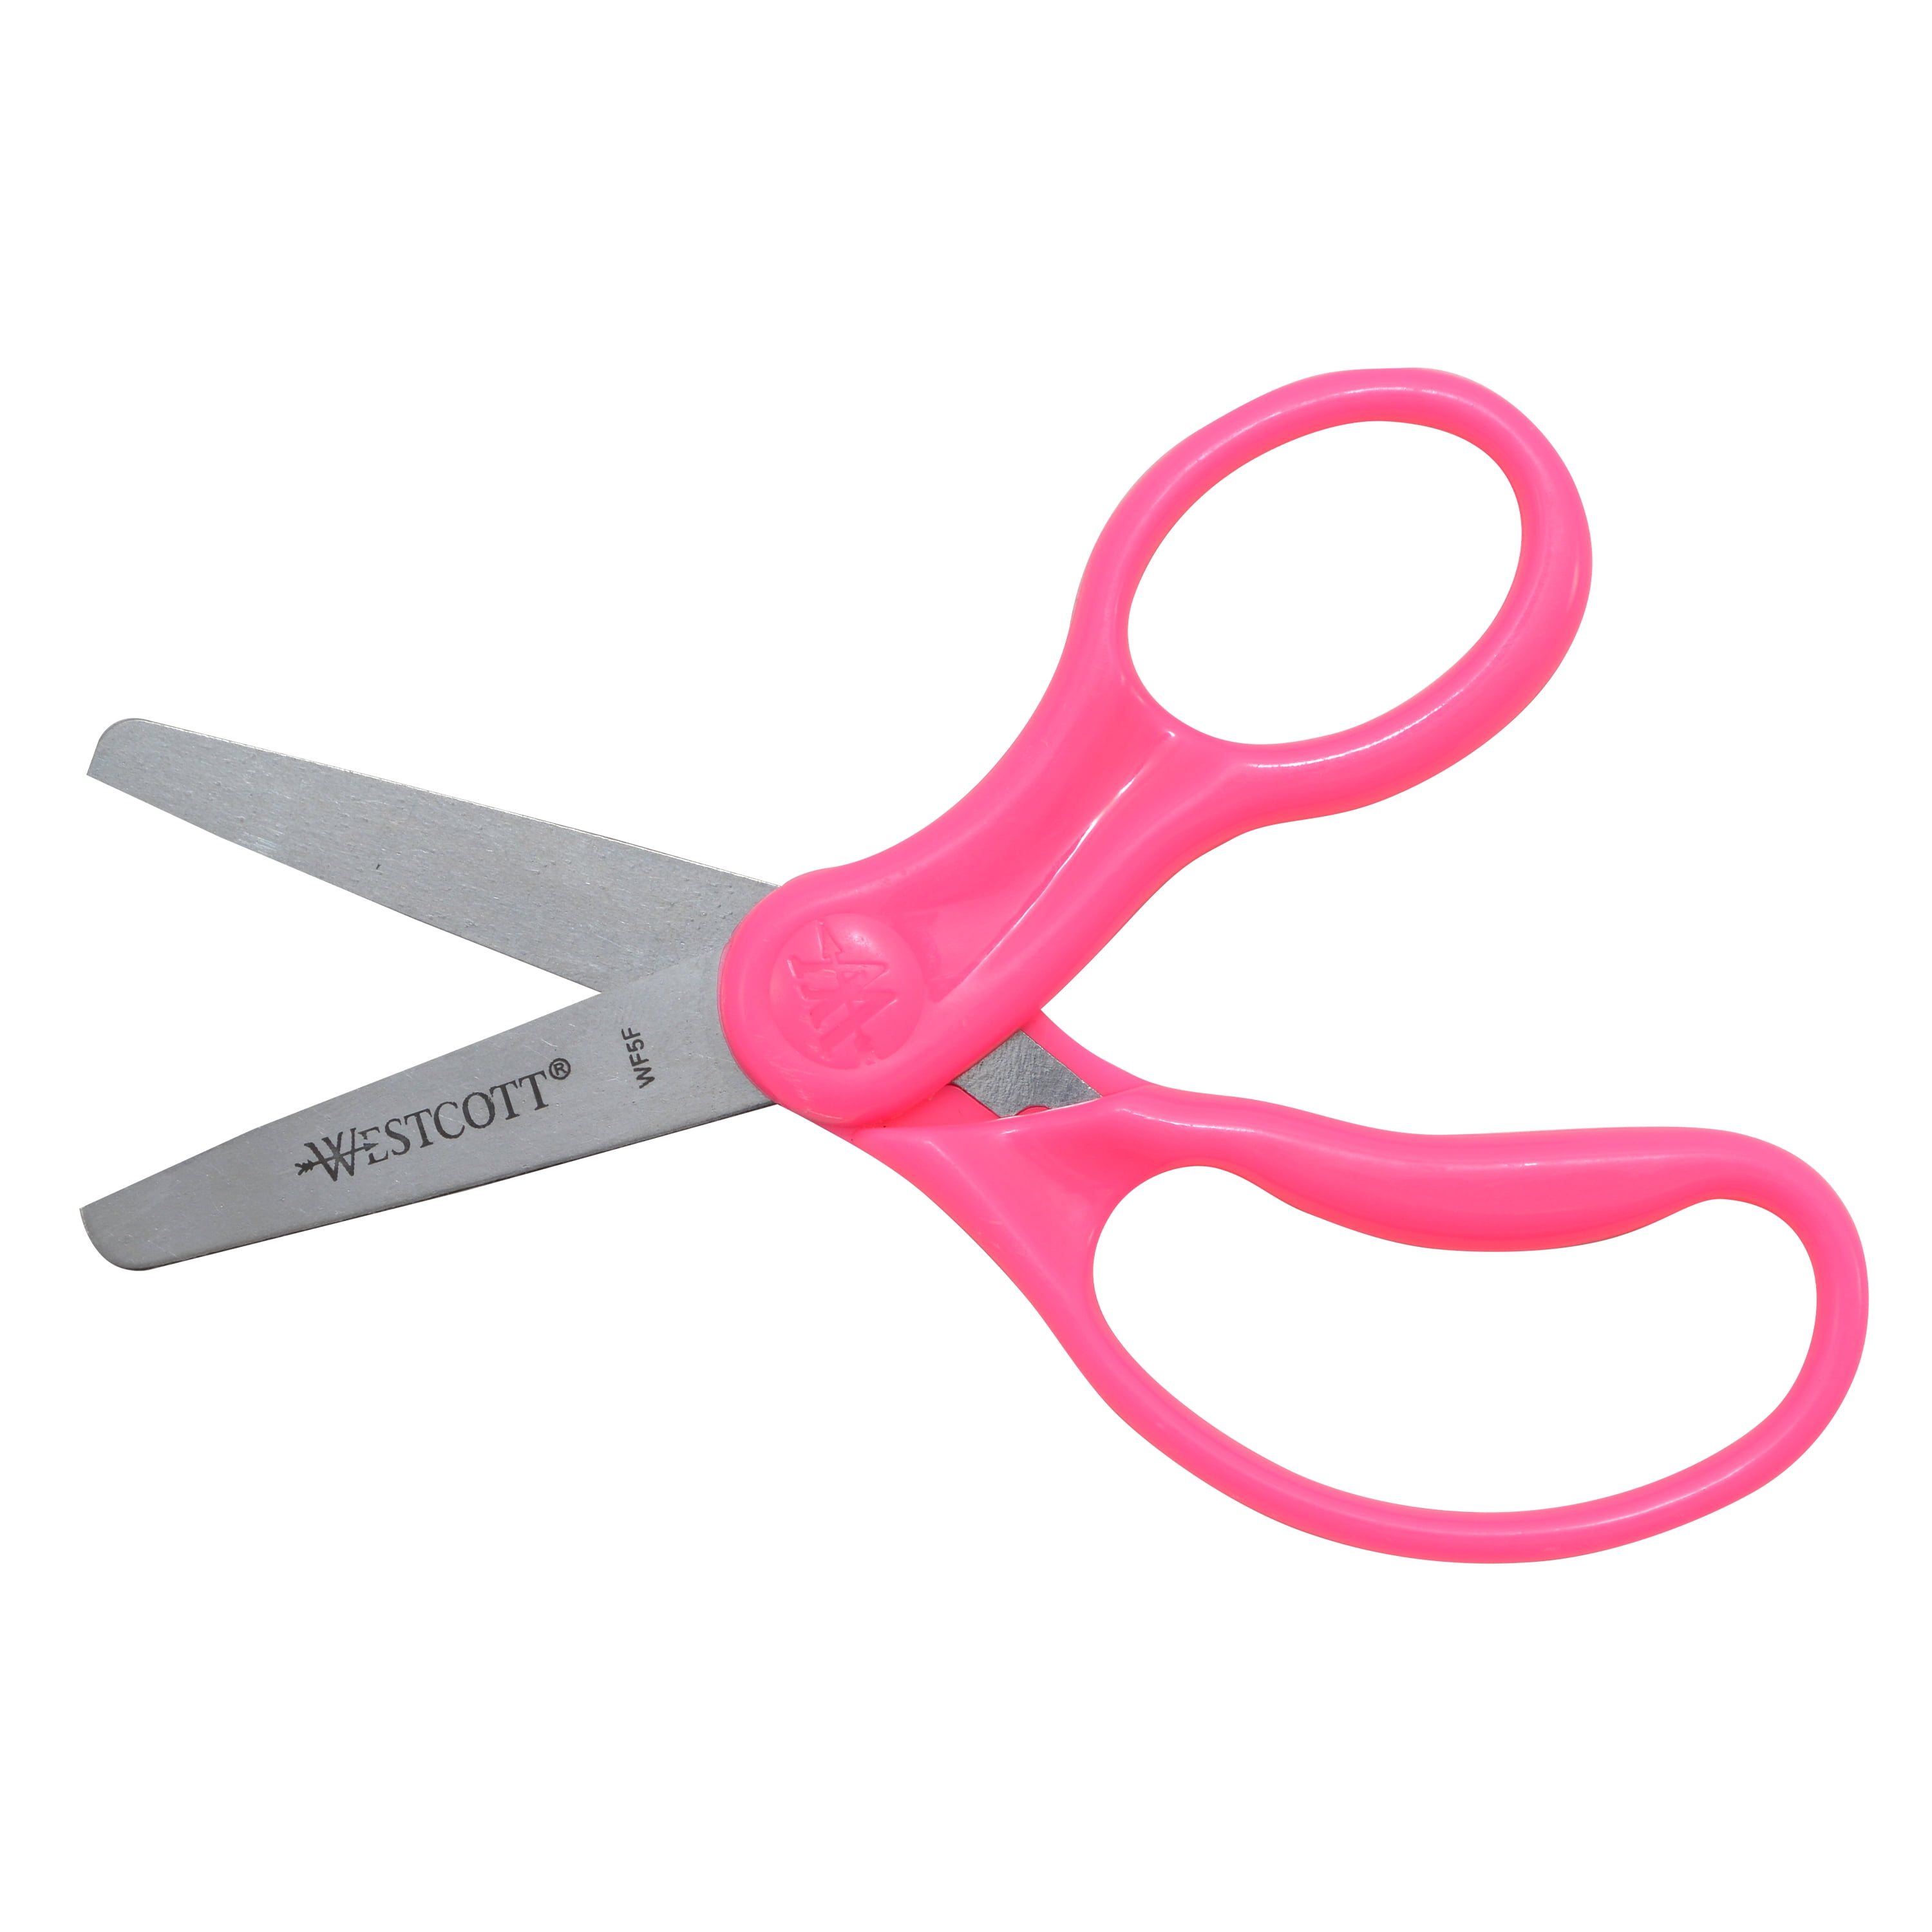 Westcott - Westcott Child Safety All Nylon Scissors, 5-Inch, Blunt